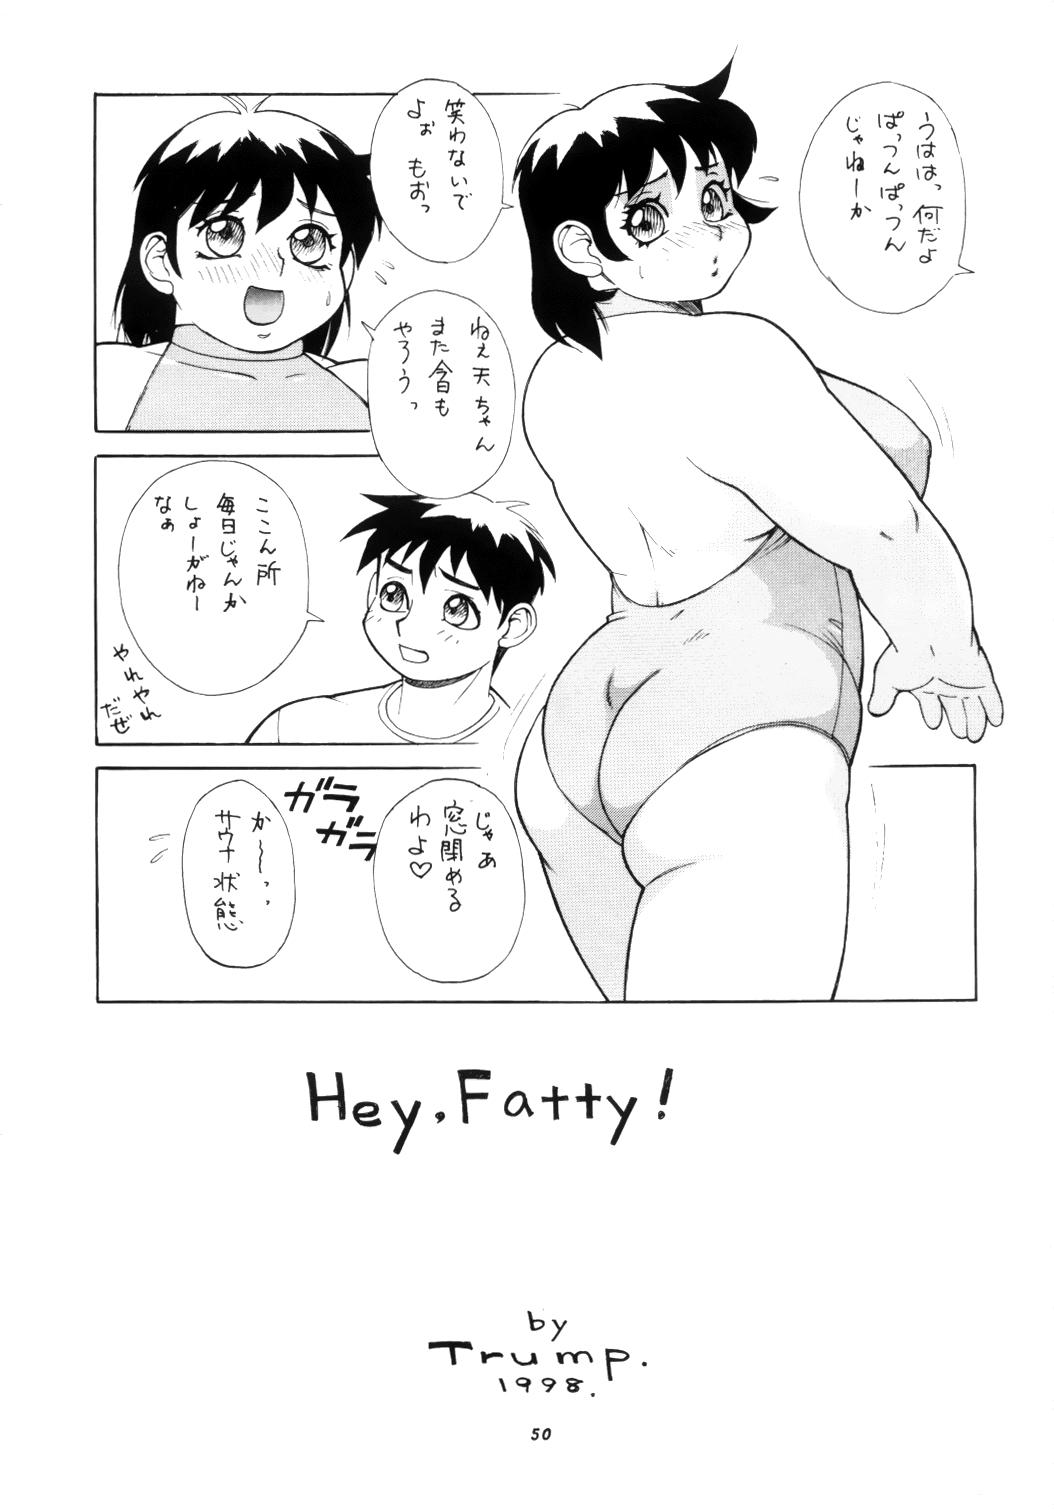 Hey! Fatty 0